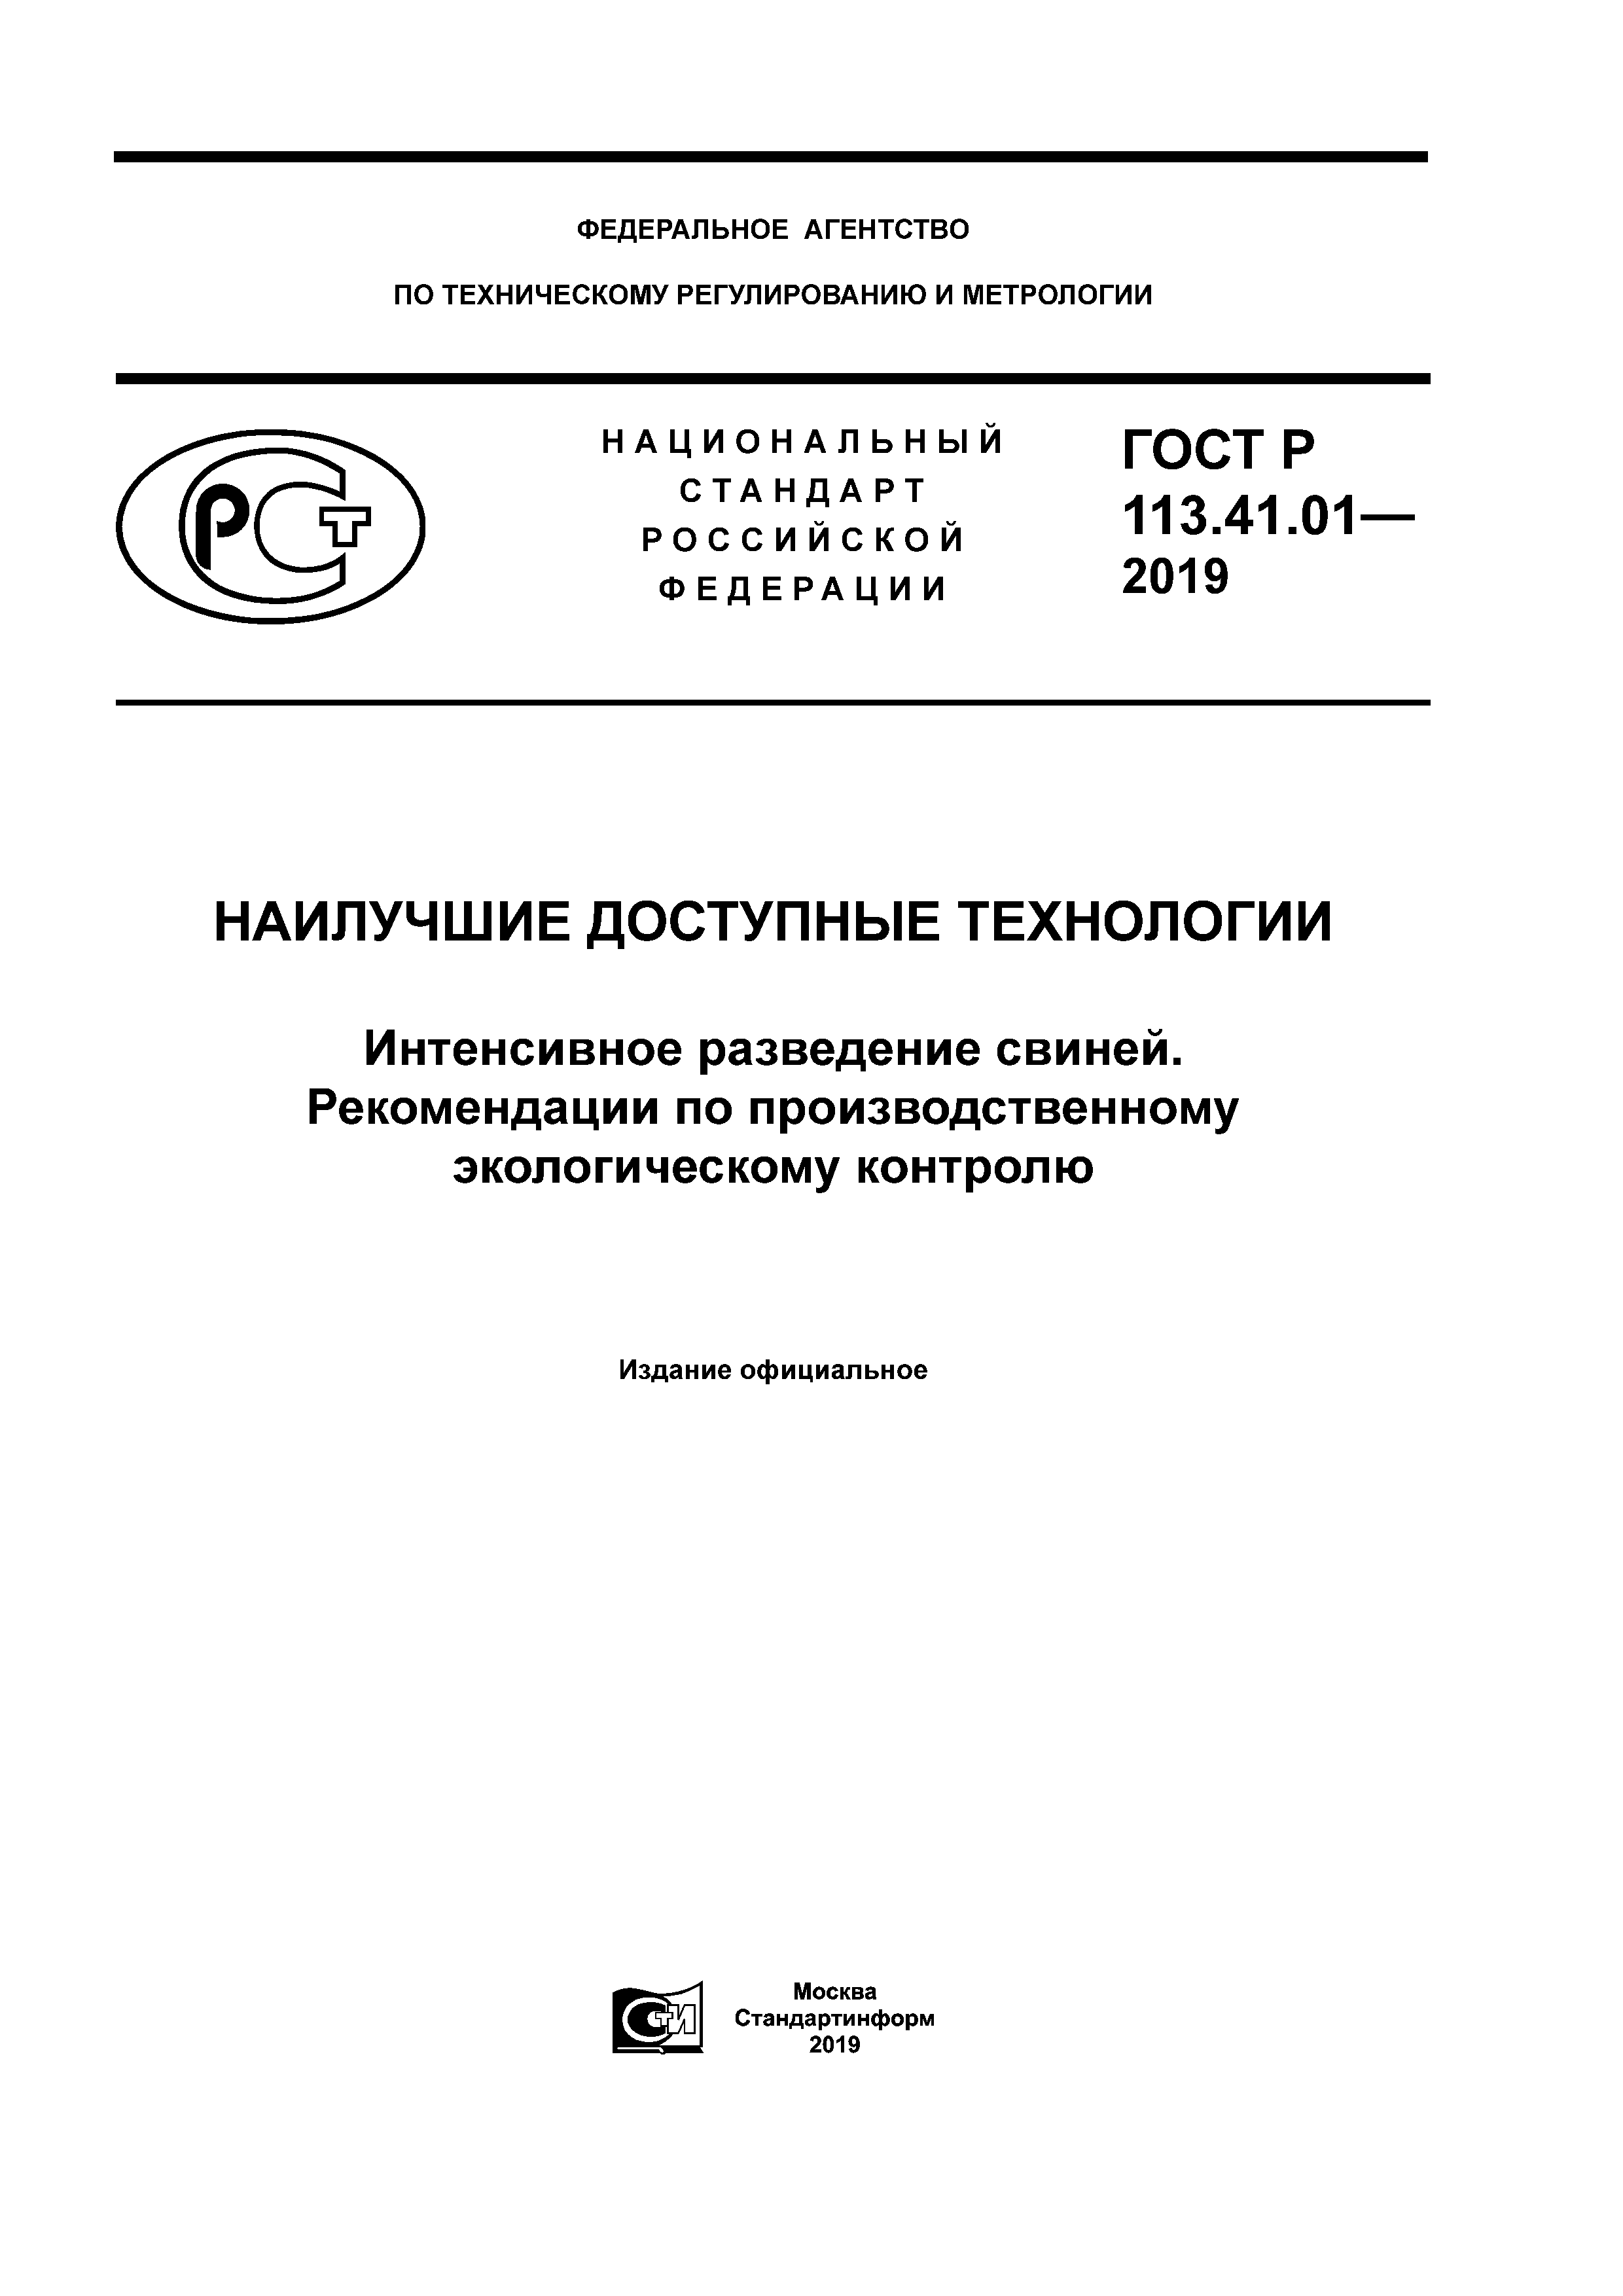 ГОСТ Р 113.41.01-2019